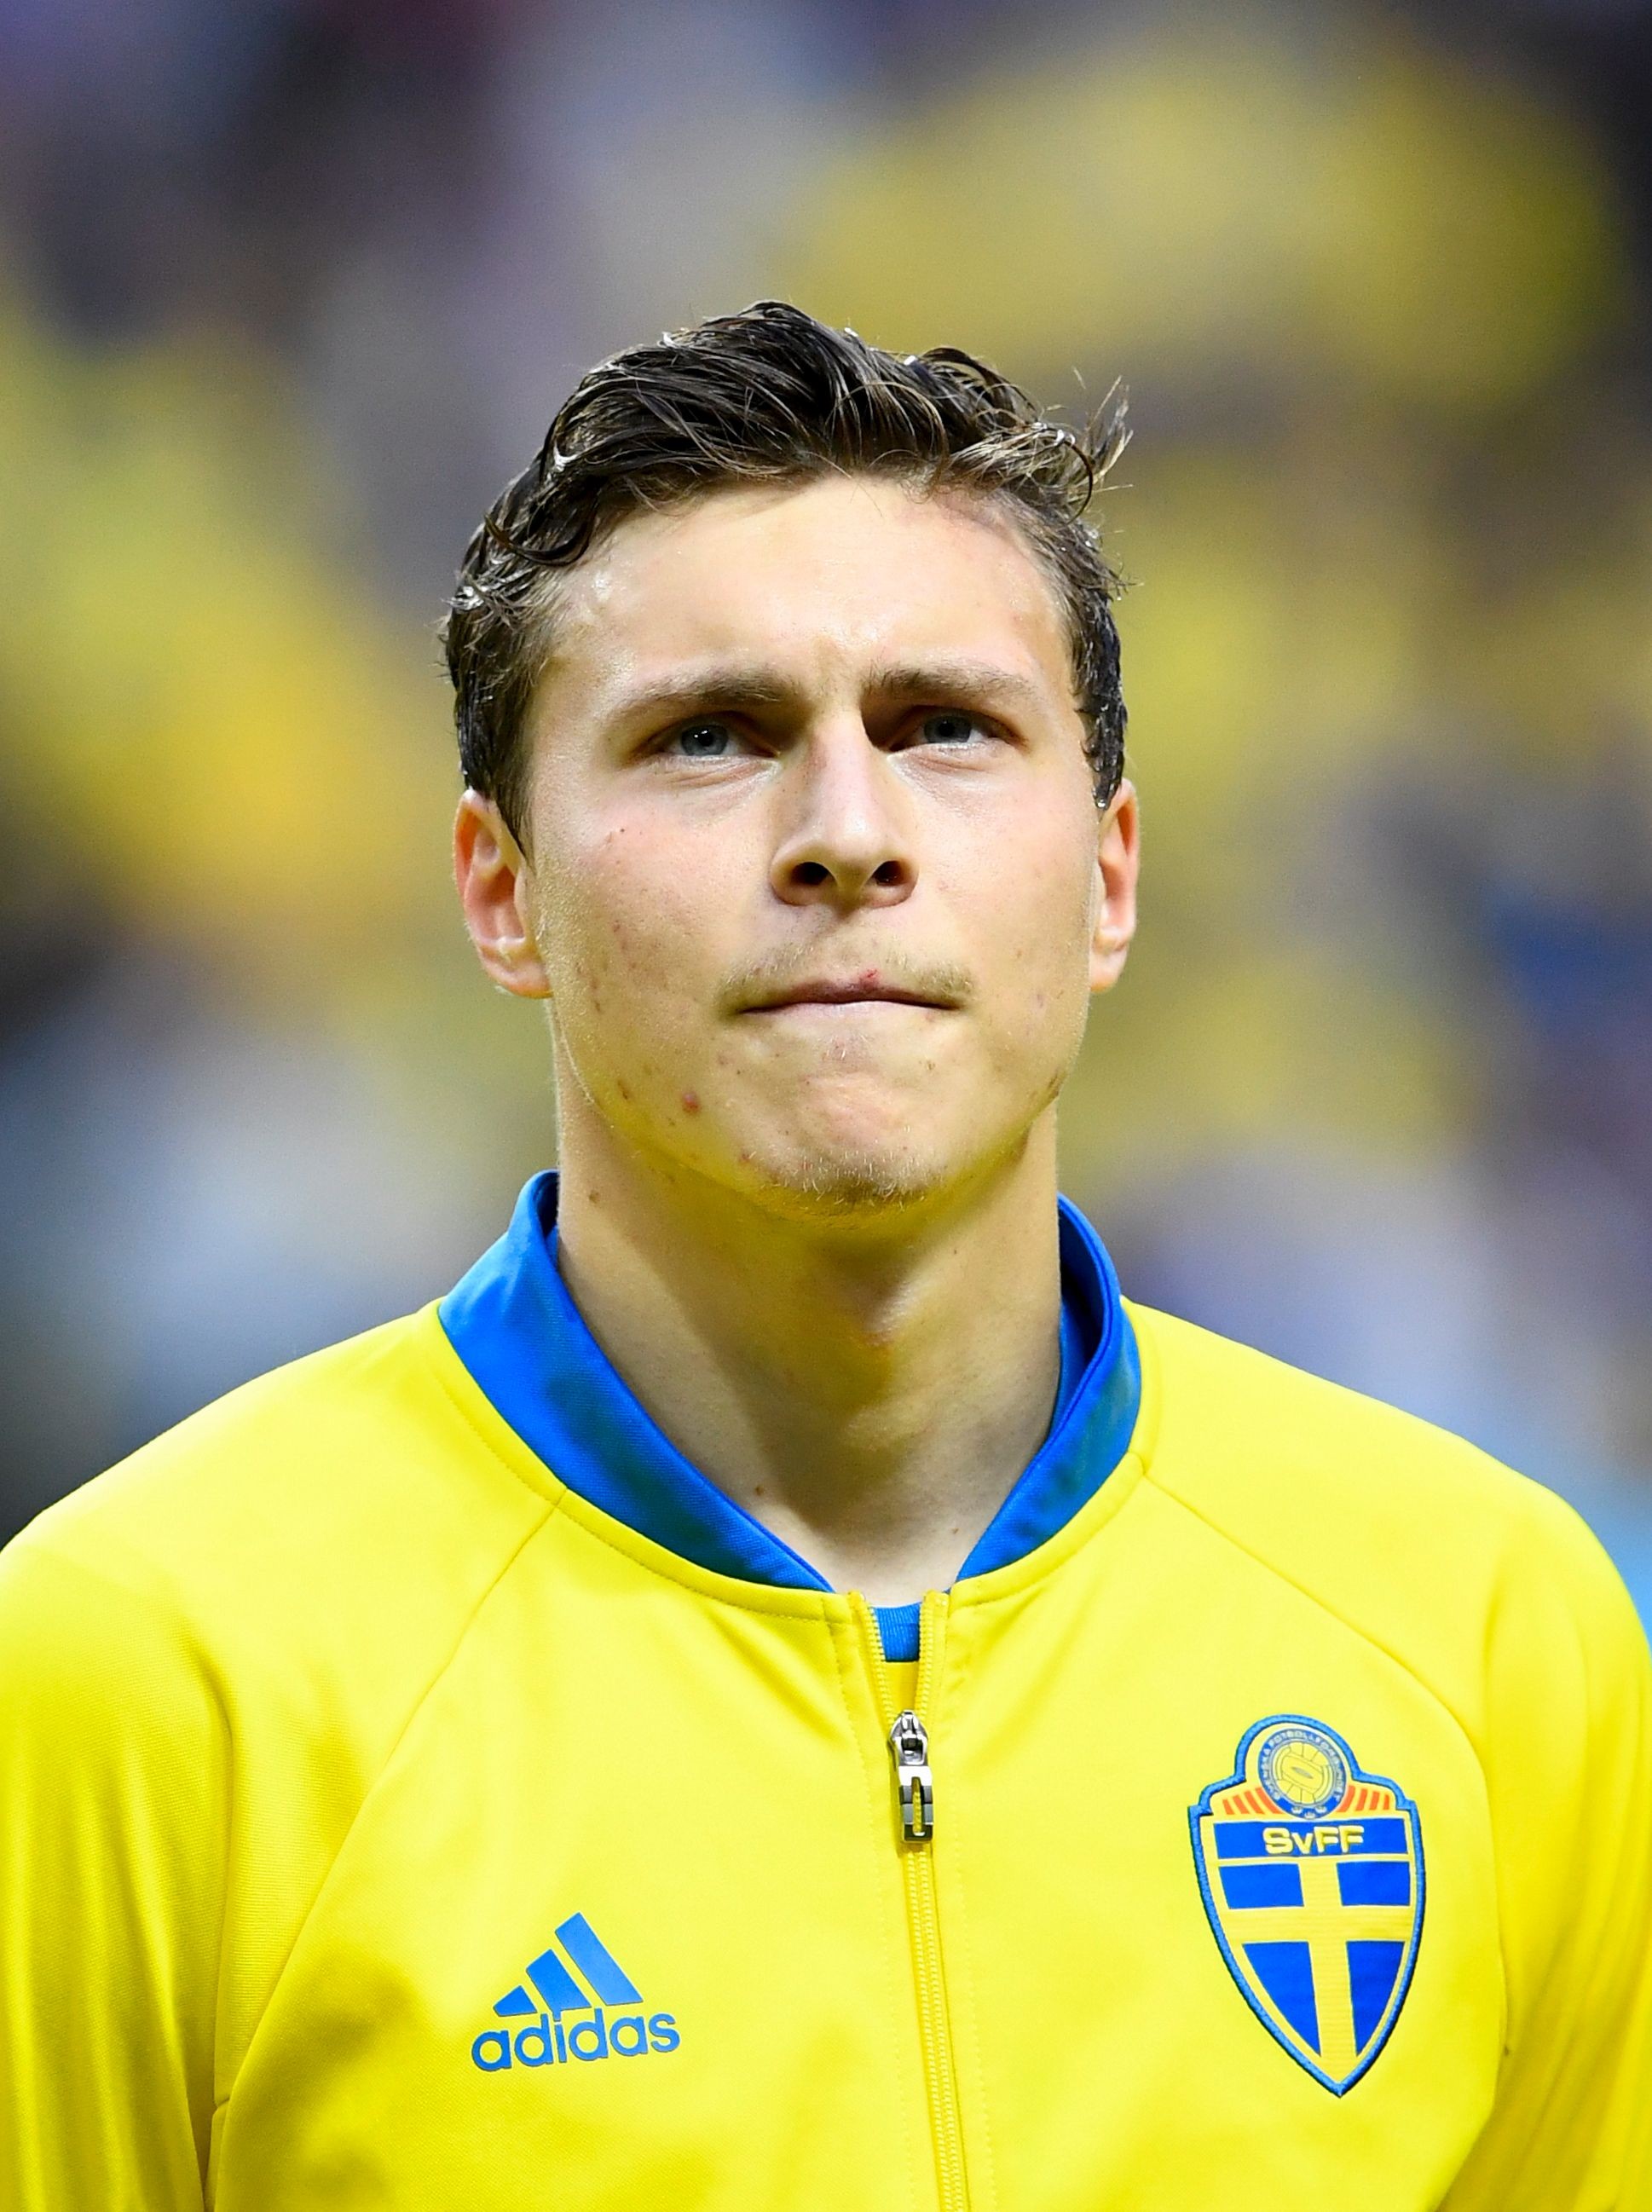 Sweden defender Victor Lindelof ahead of the match against France in Solna. Photo: AFP